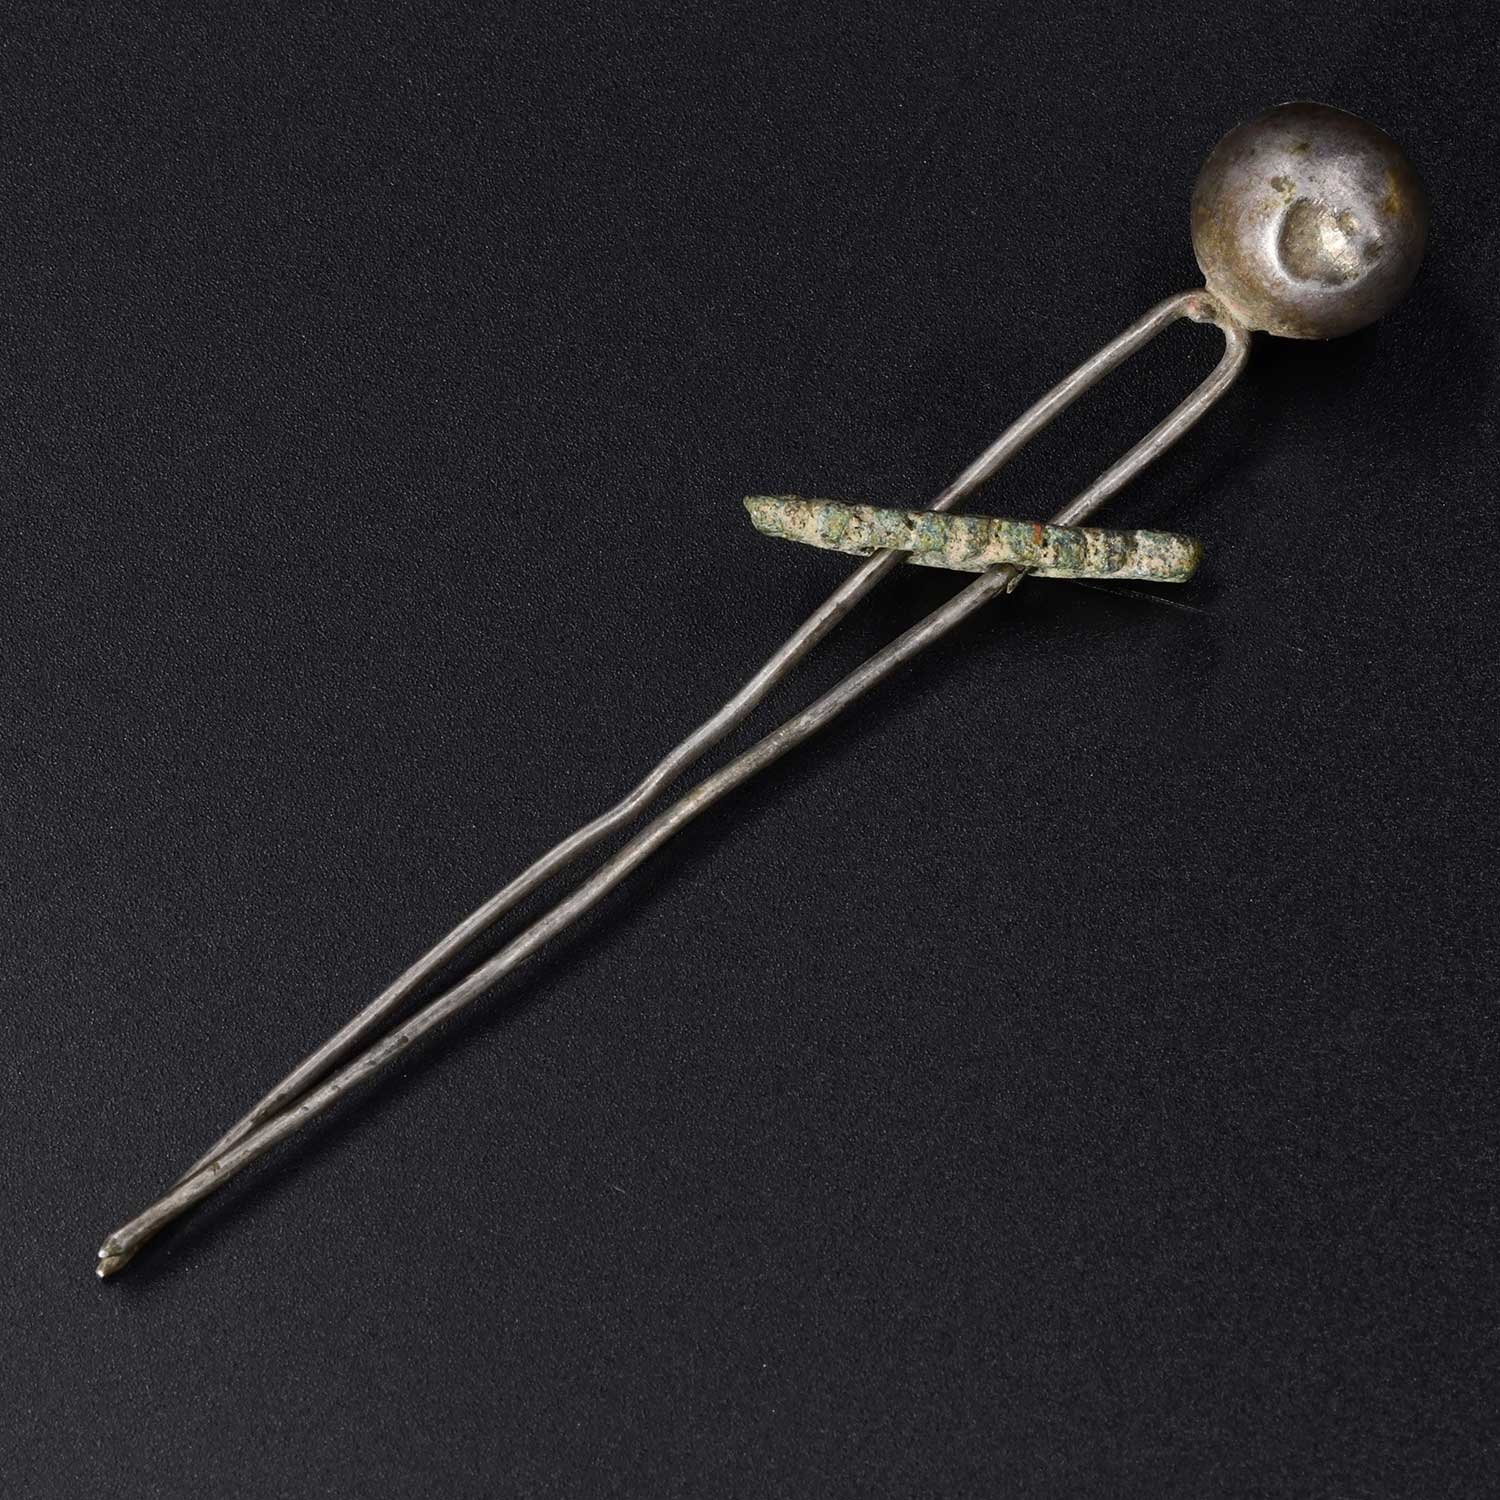 A Greek Silver Brooch Pin, Classical Period, ca. 5th - 4th century BCE